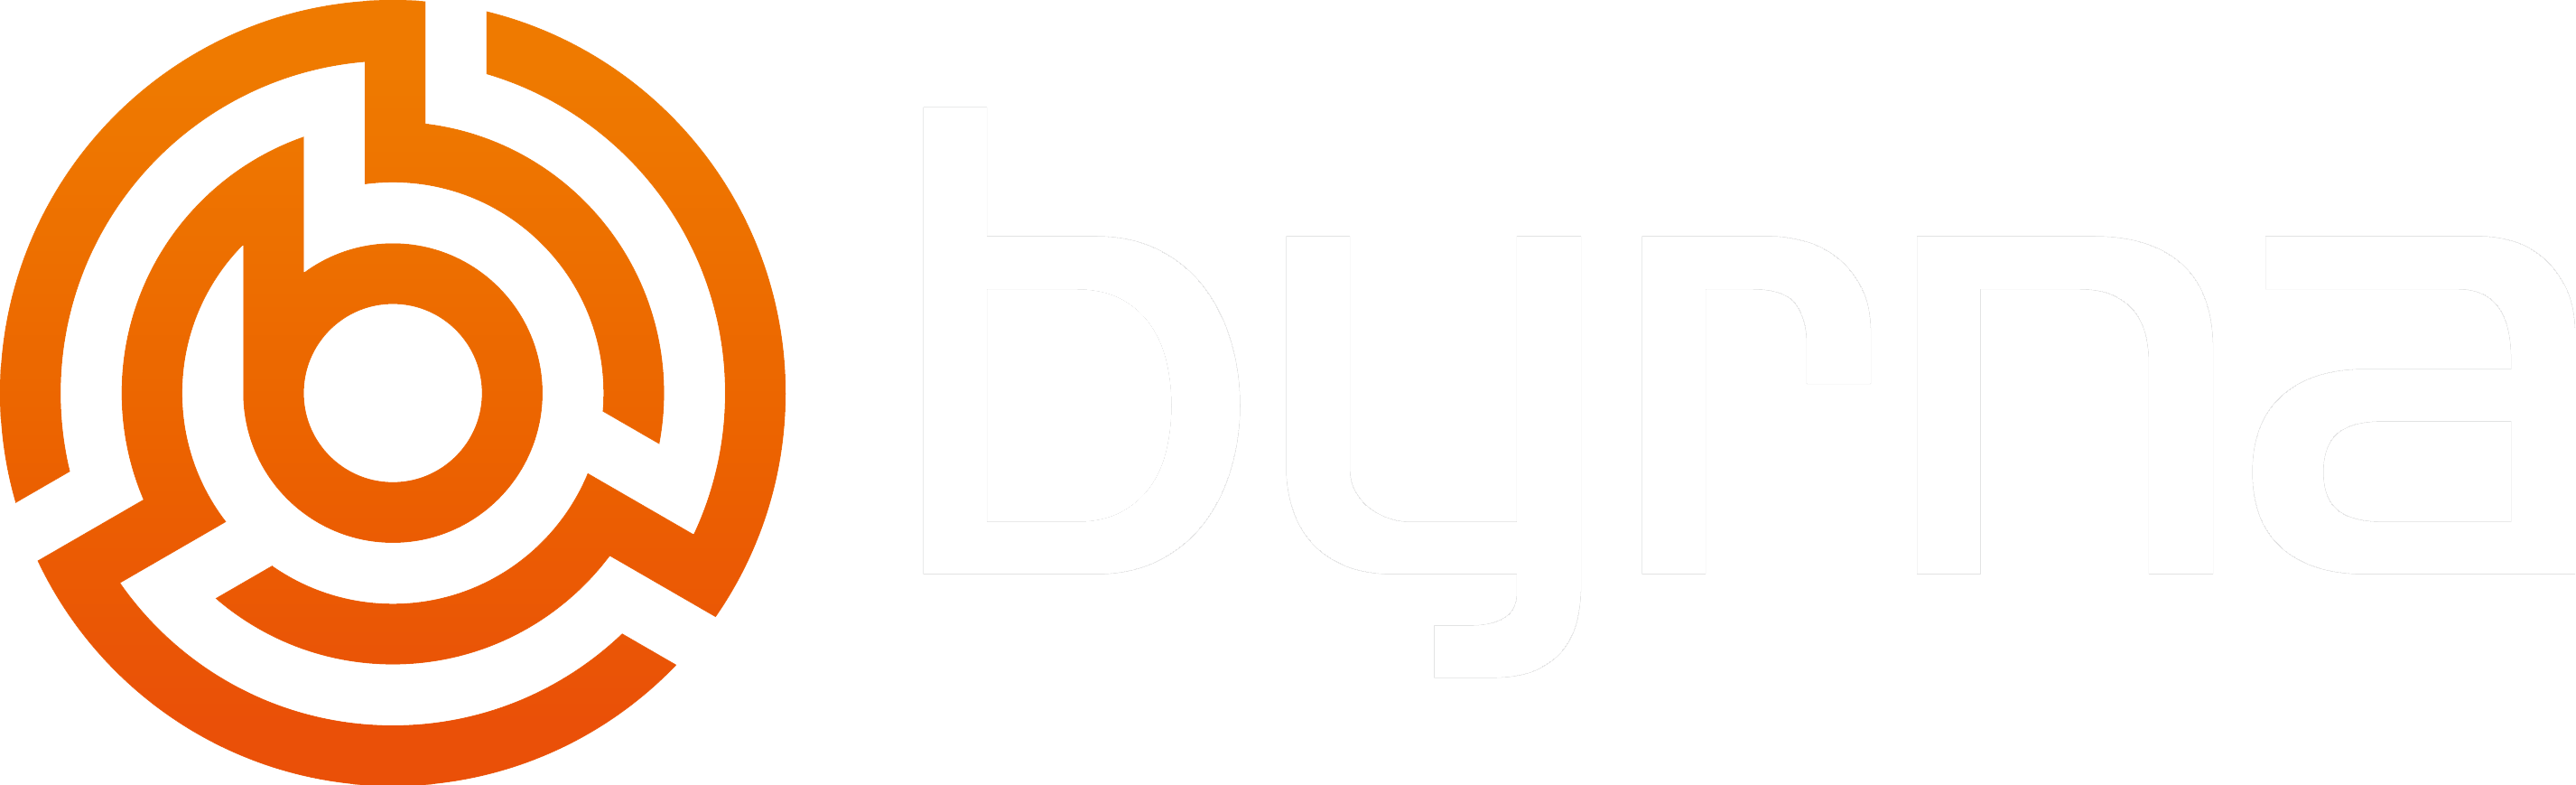 Byrna Technologies Inc logo